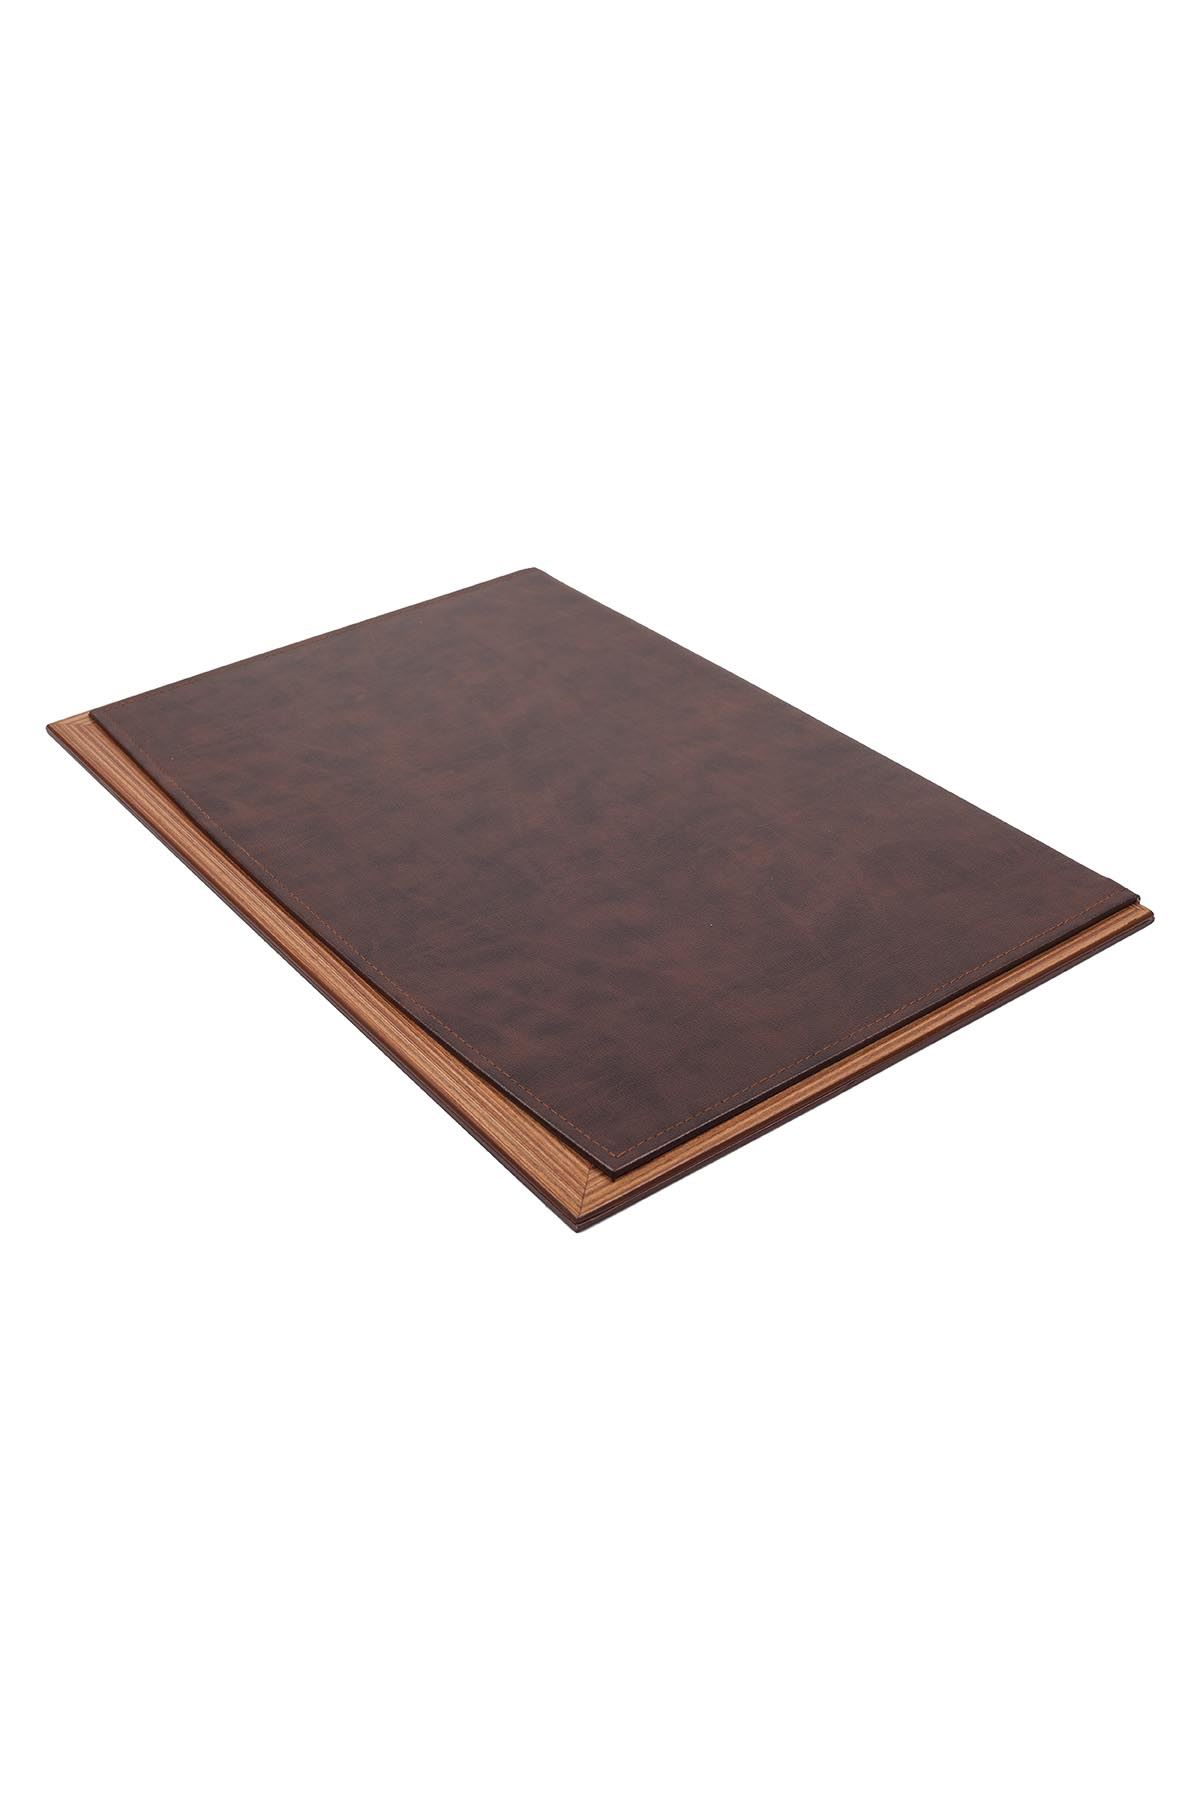 Star Lux Leather Desk Set Brown 11 Accessories